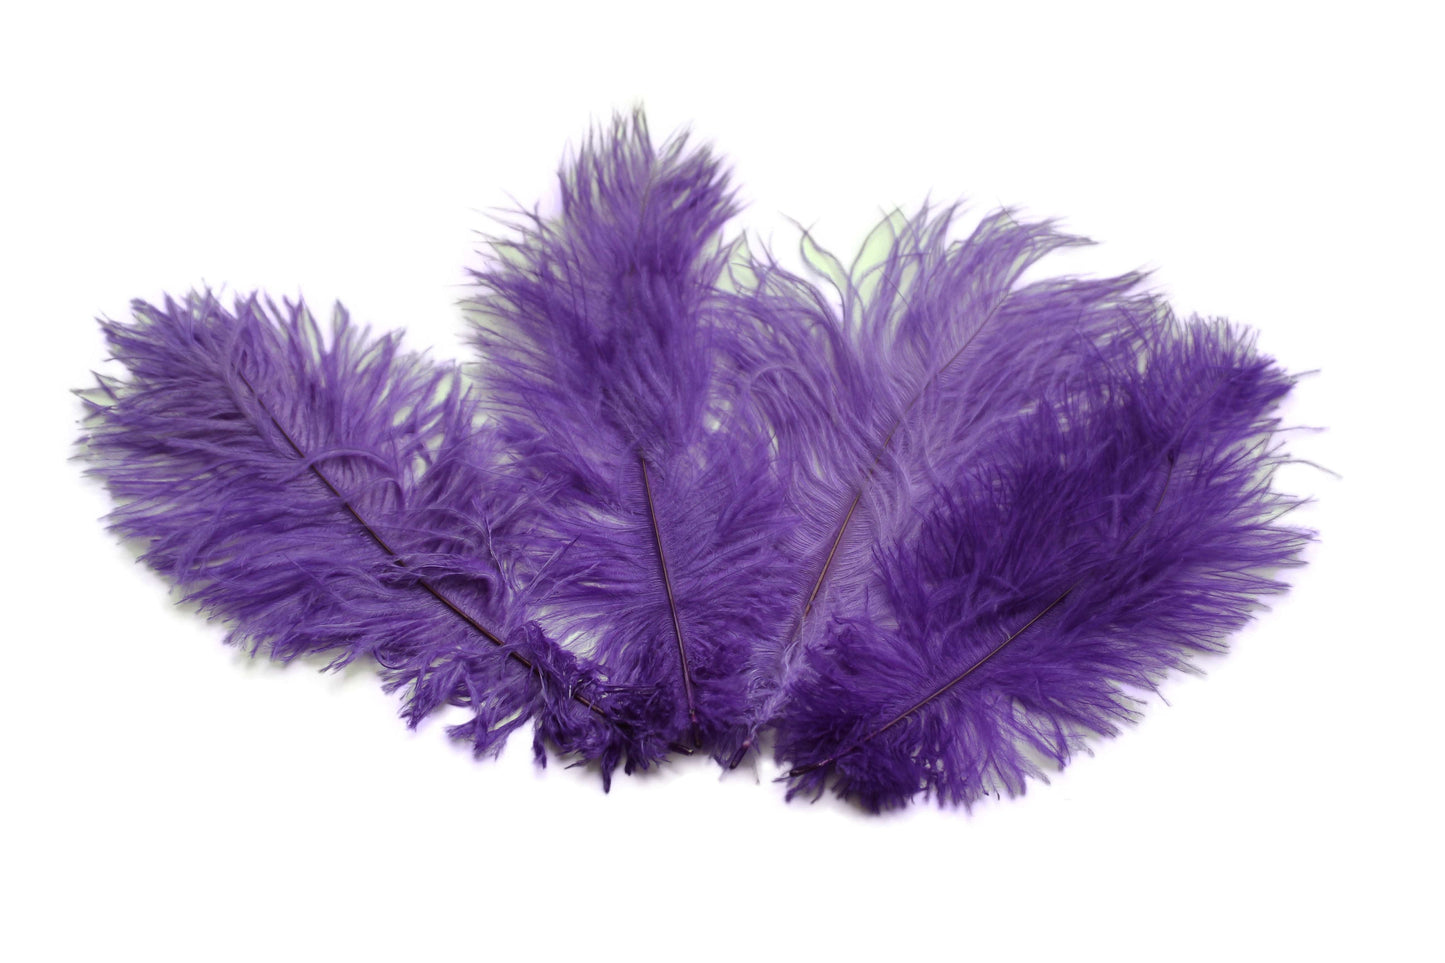 Ostrich Flexible Feathers 13-16 (Purple) for Sale Online